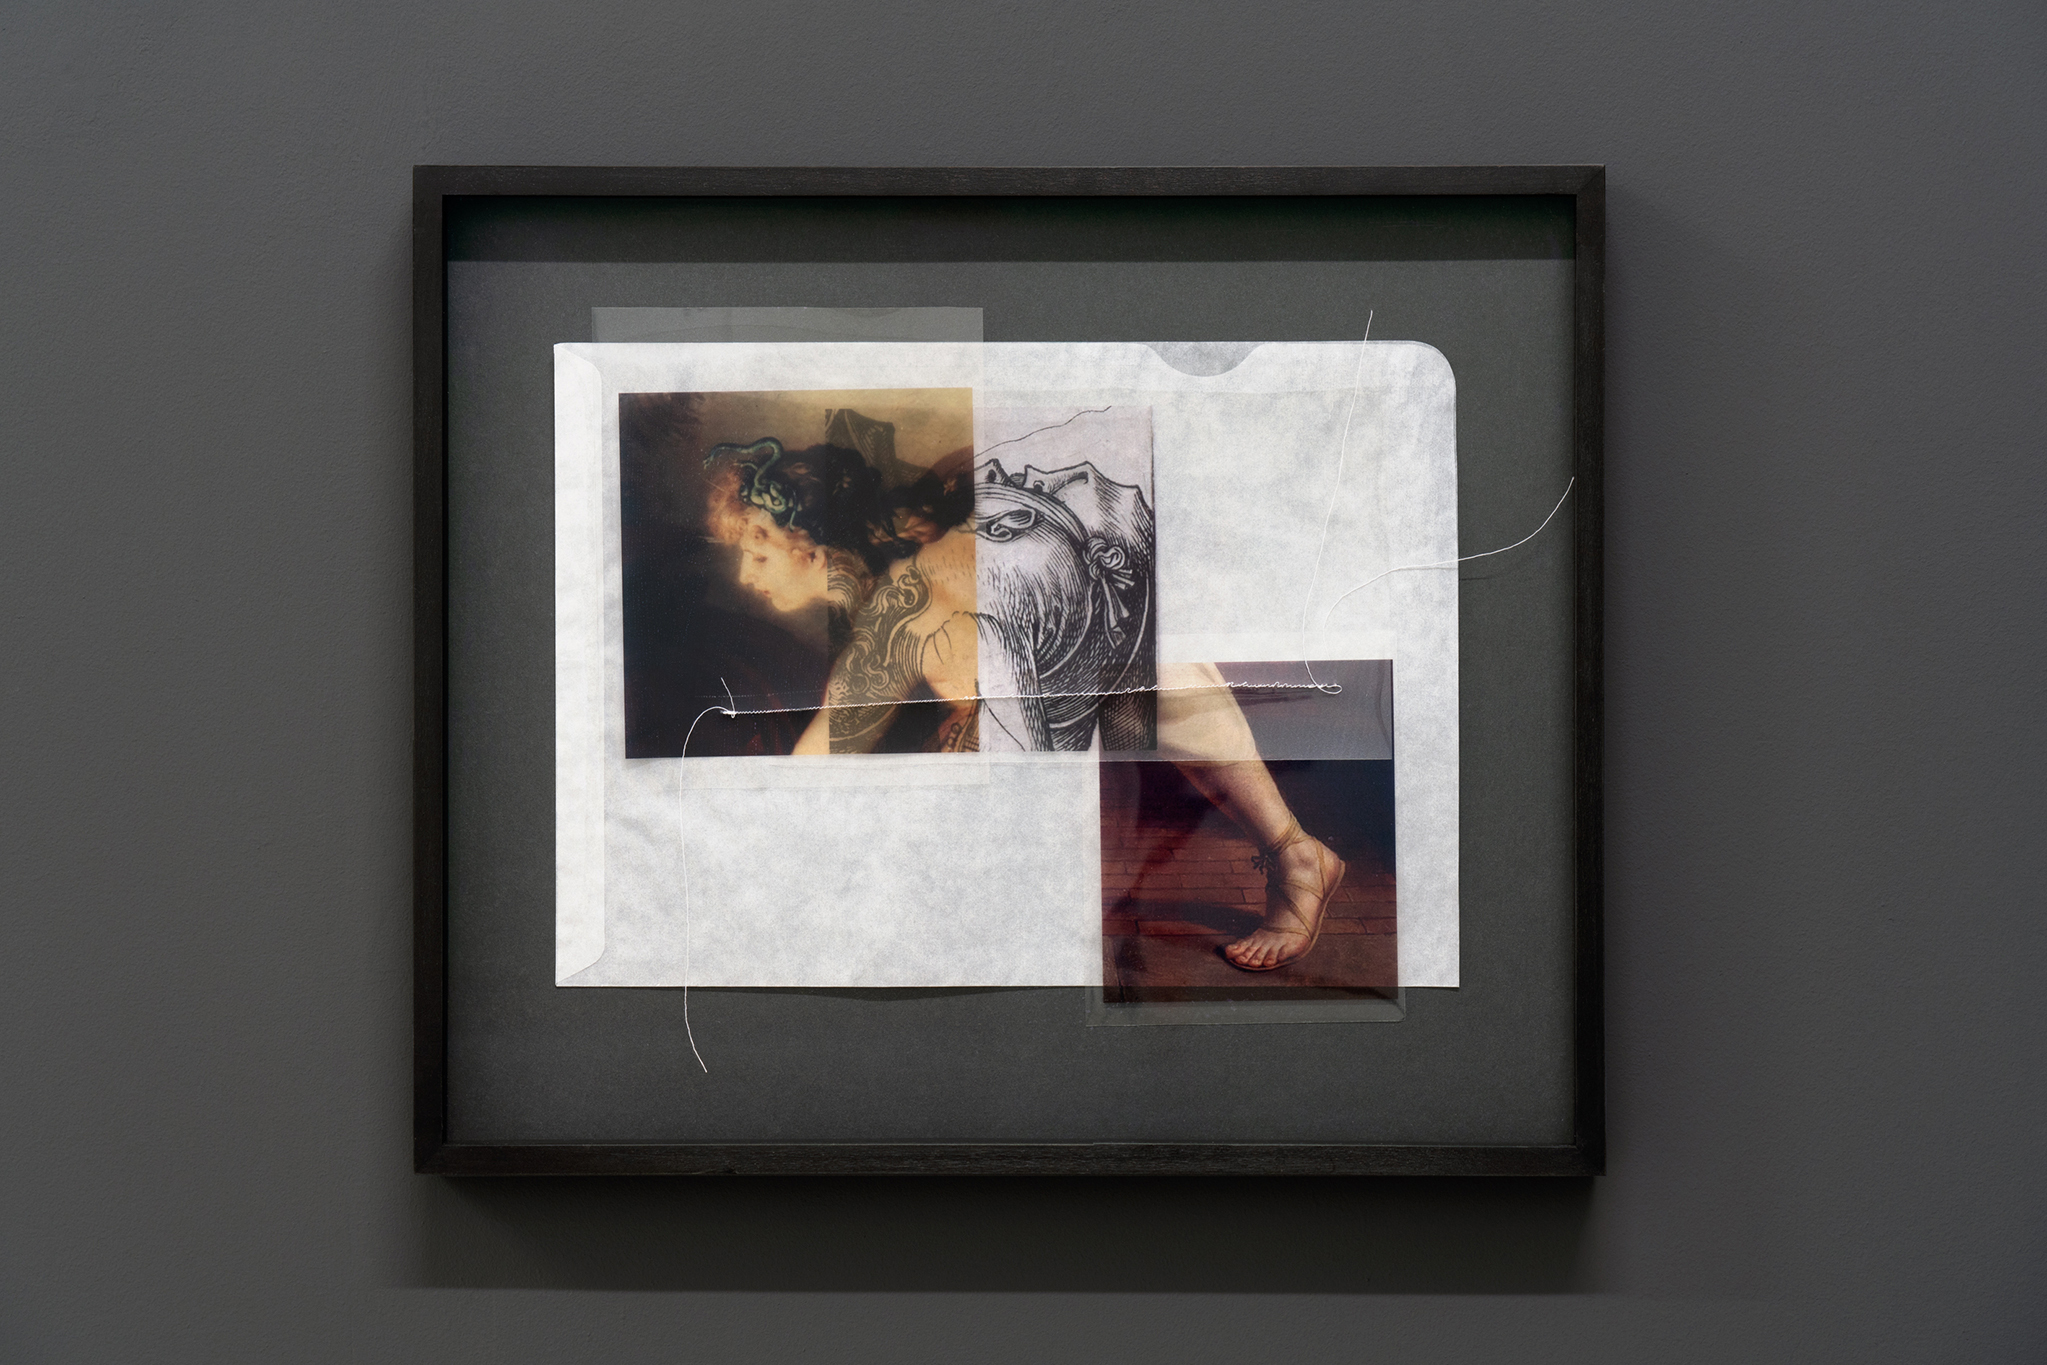 Lucas Odahara, „A Desatadora (The Untier)“, 2020–, mixed media, framed, 42x32 cm